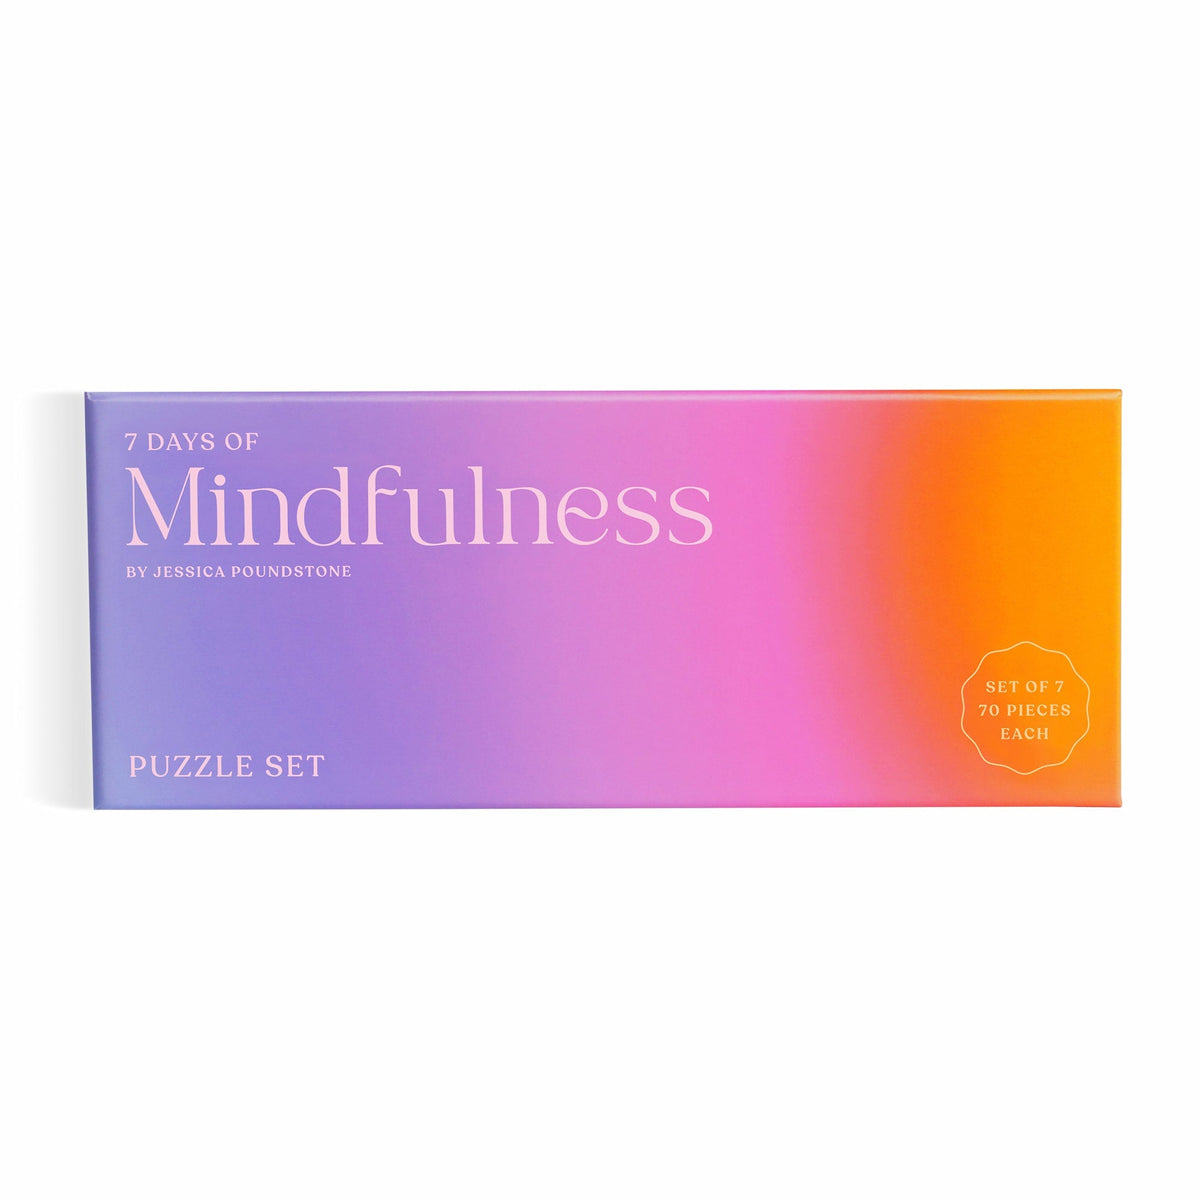 7 Days of Mindfulness by Jessica Poundstone Puzzle Set